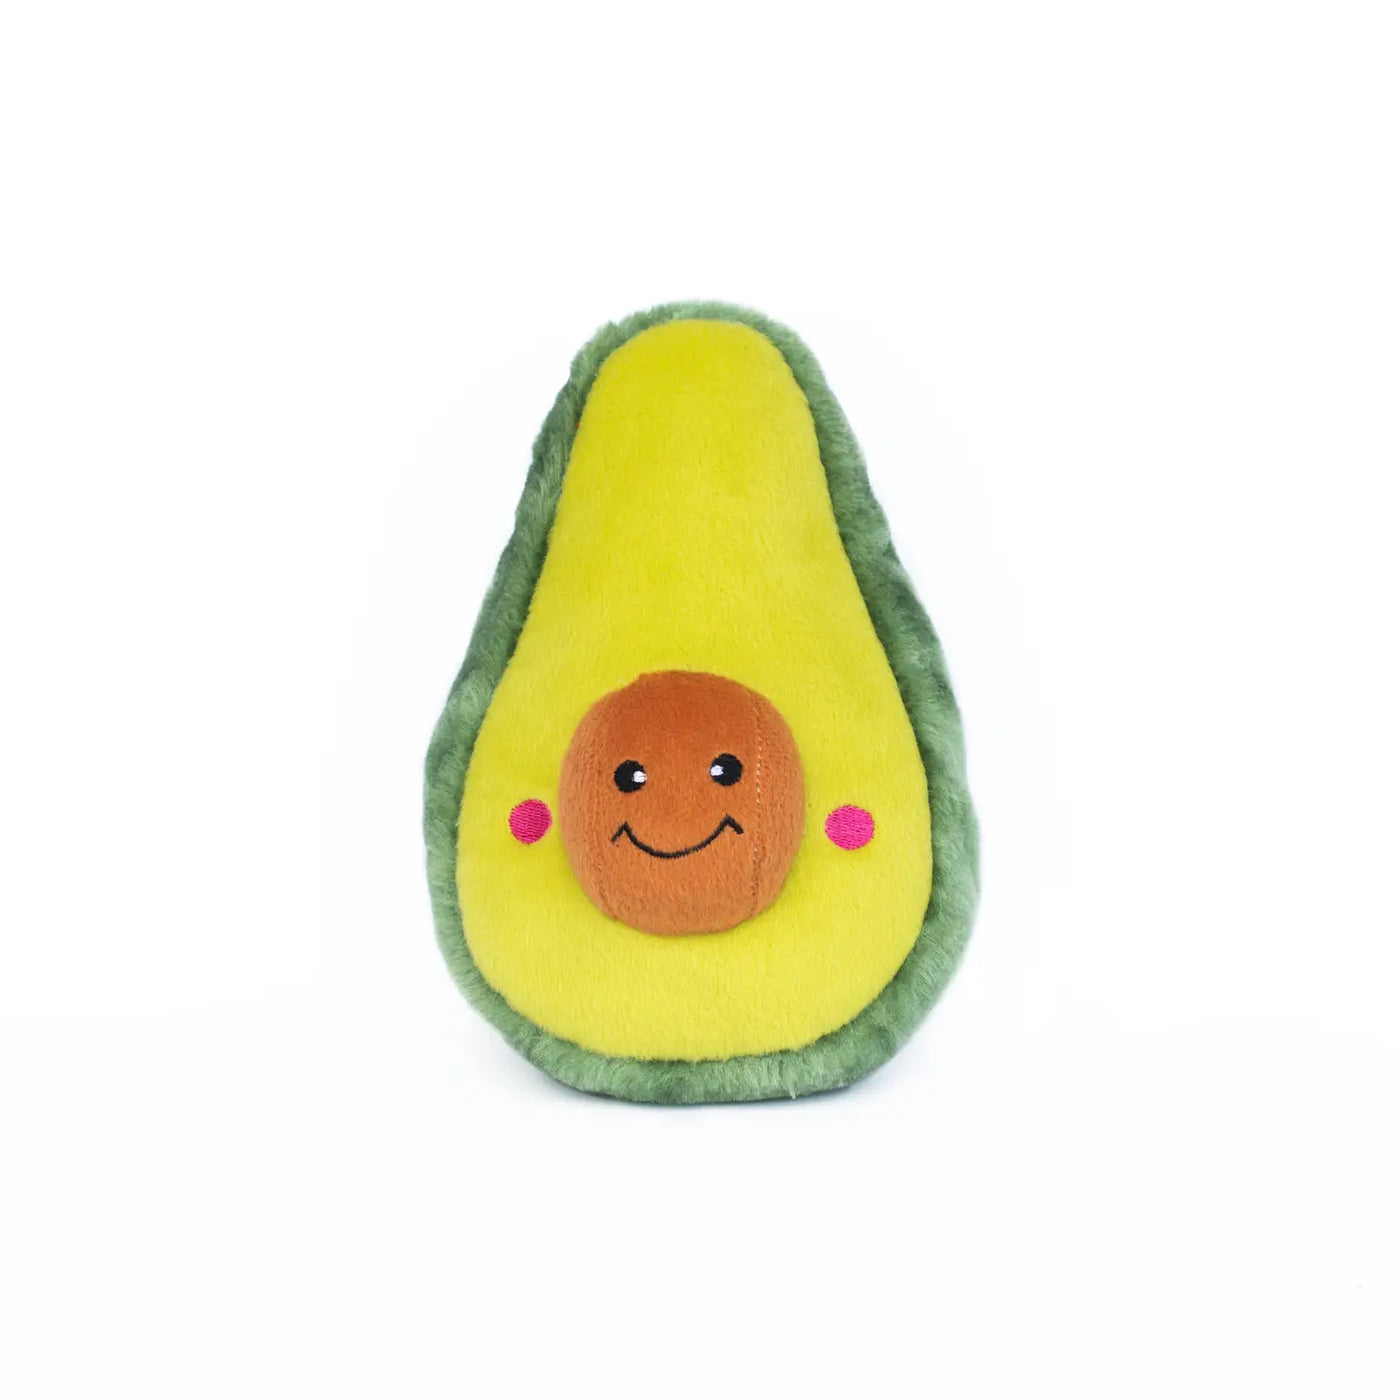 Plush avocado dog toy with a smiley face